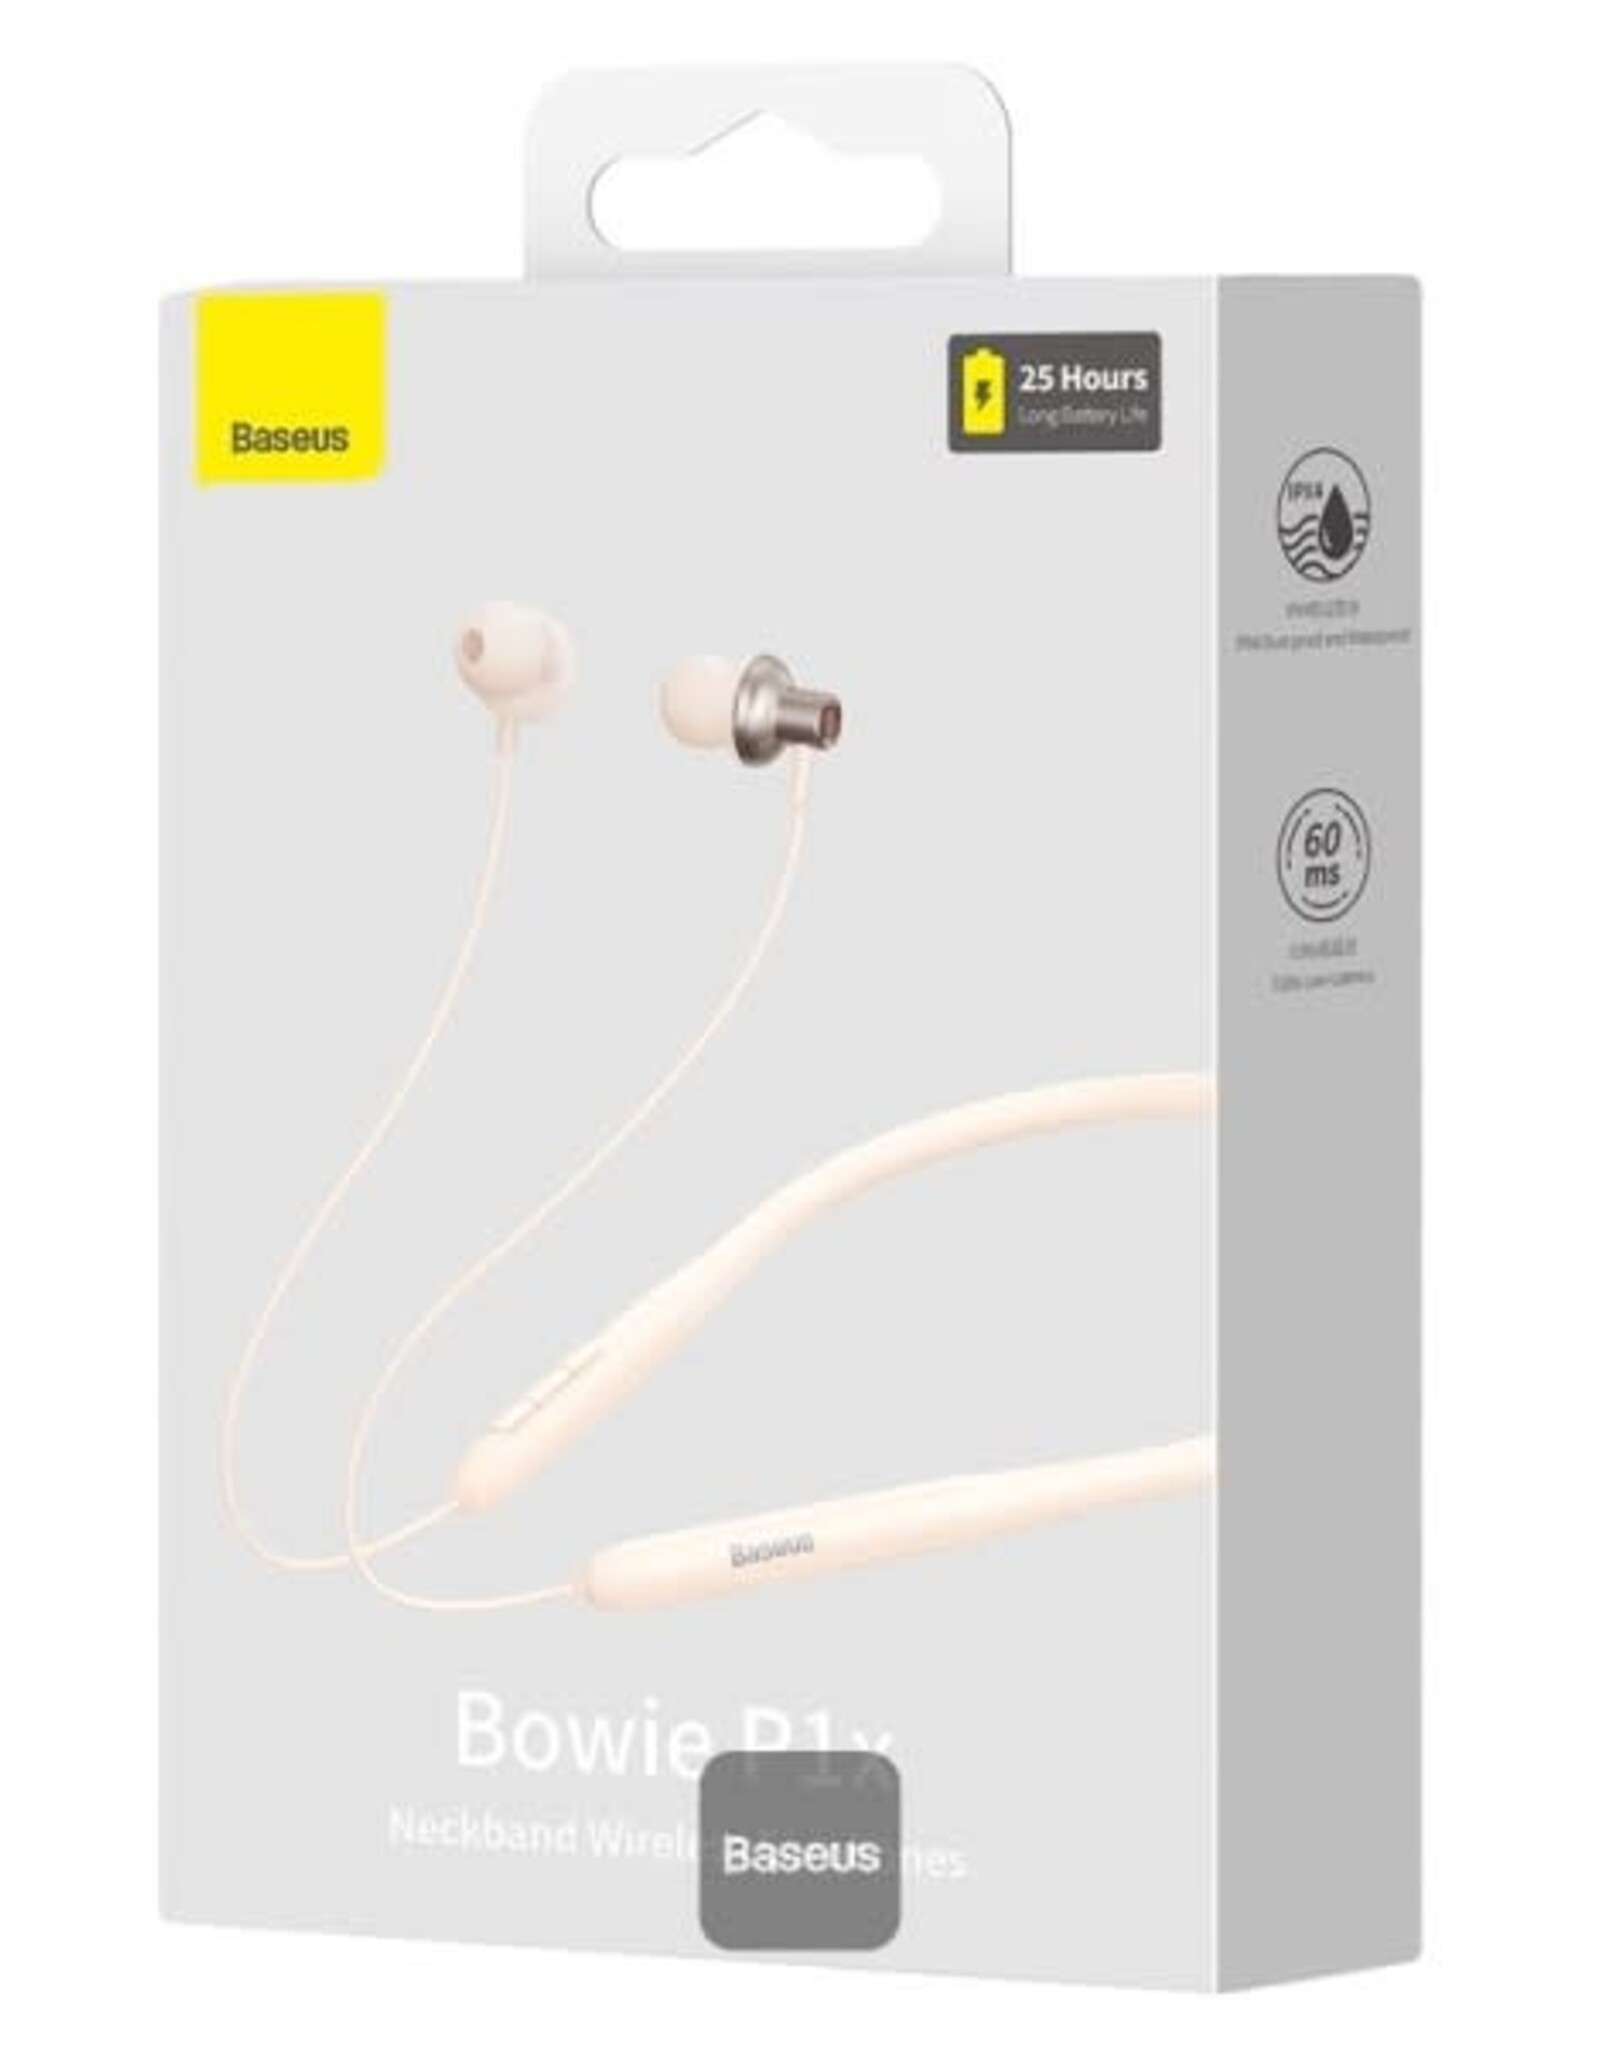 Baseus Bowie P1x Neckband Wireless Earphones 25 Hours White